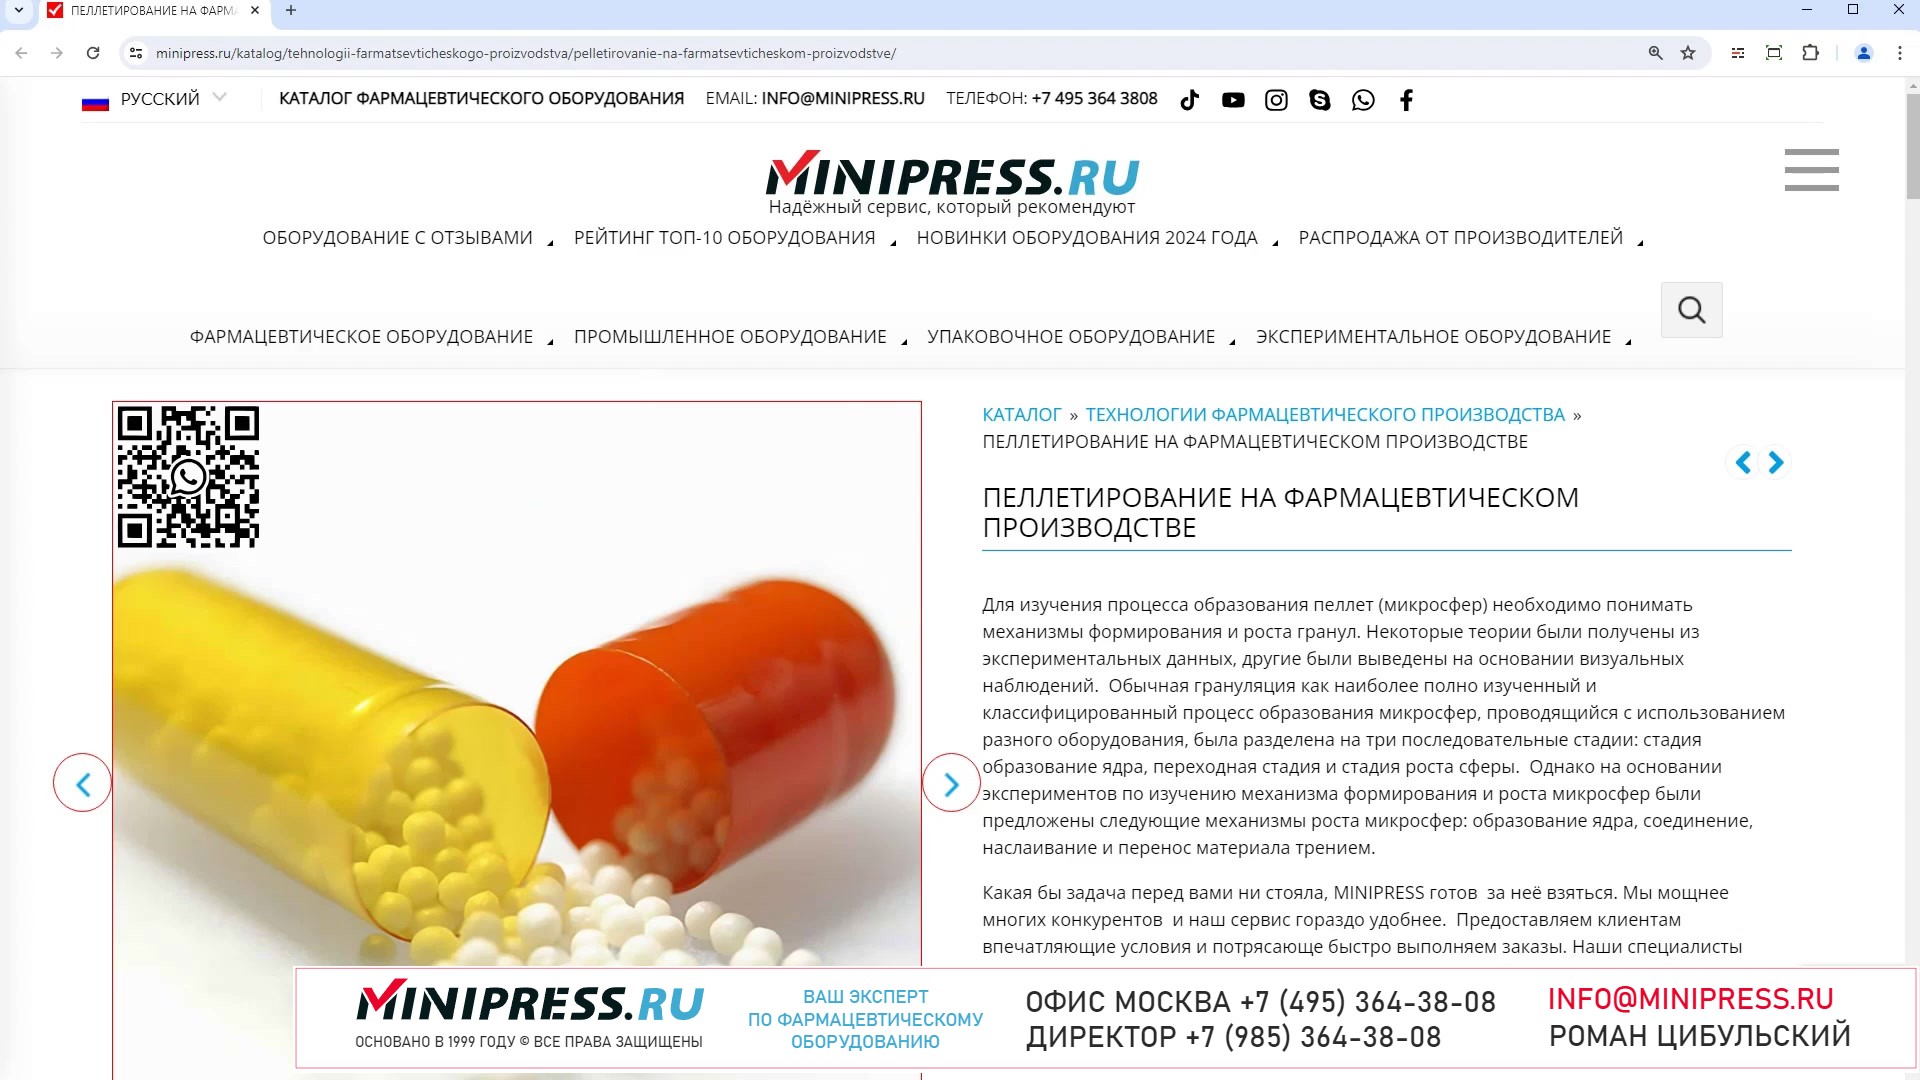 Minipress.ru Пеллетирование на фармацевтическом производстве